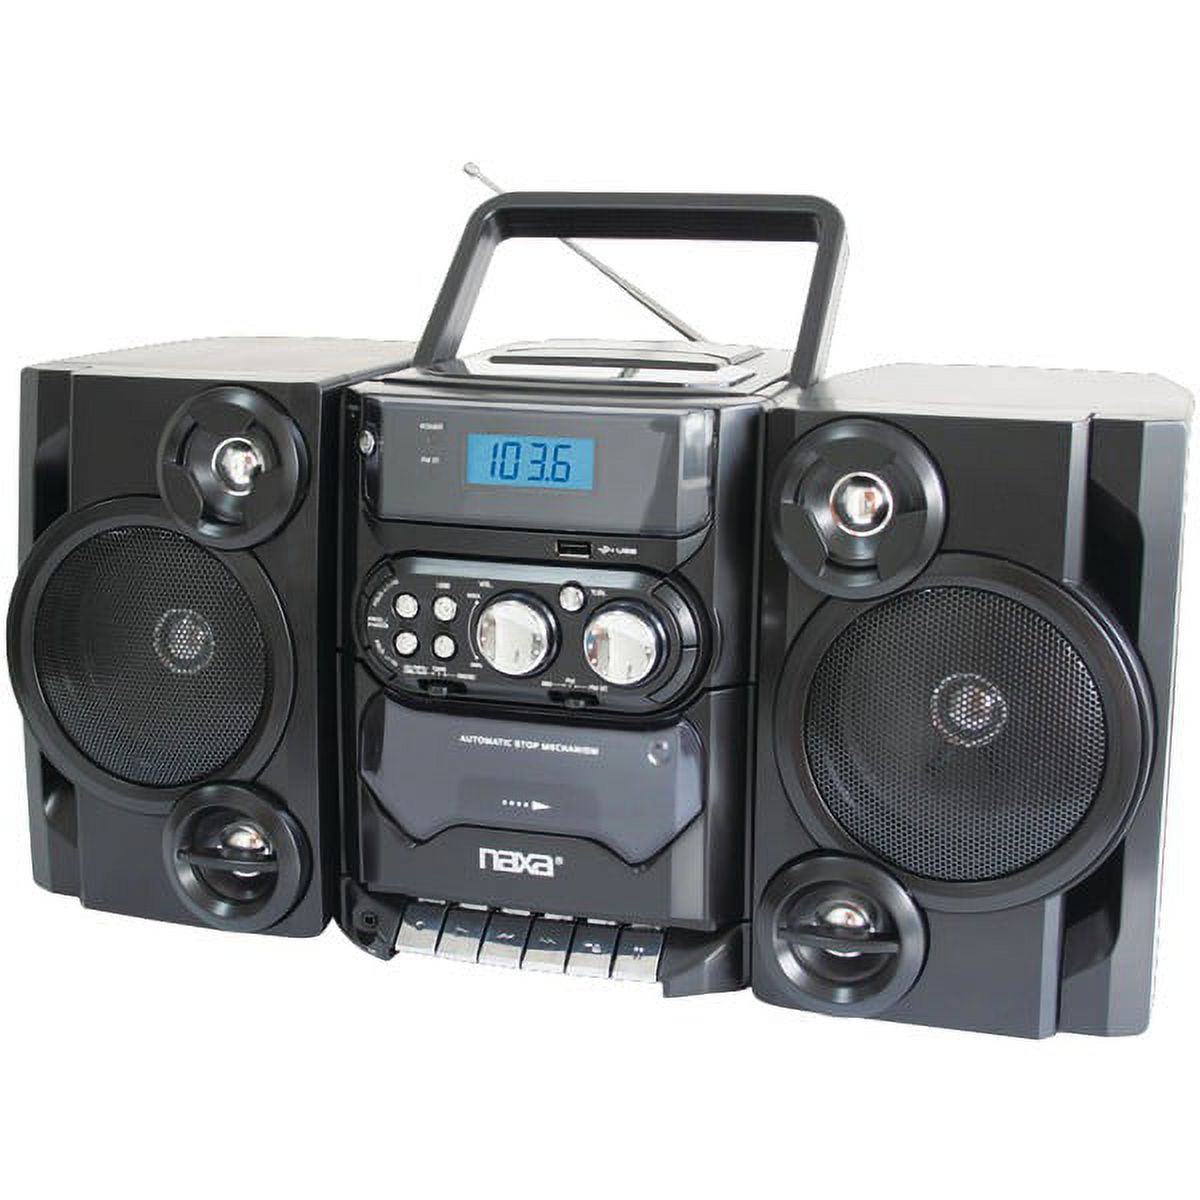 Naxa Portable Mp3/cd Player With Am/fm Radio & Detachable Speakers - image 1 of 1